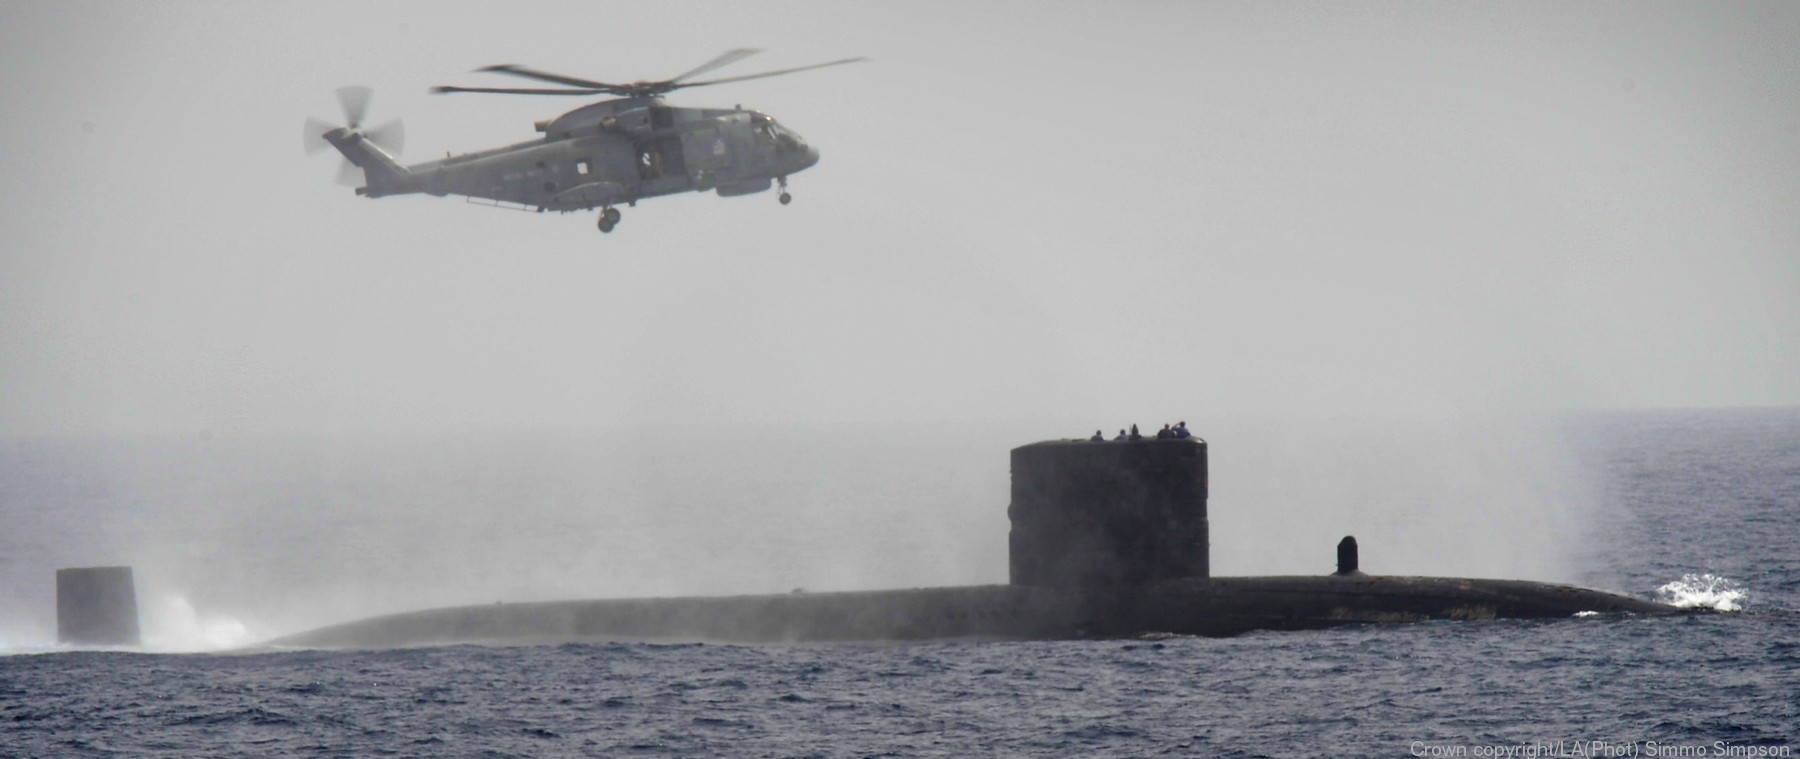 s87 hms turbulent trafalgar class attack submarine hunter killer royal navy 05